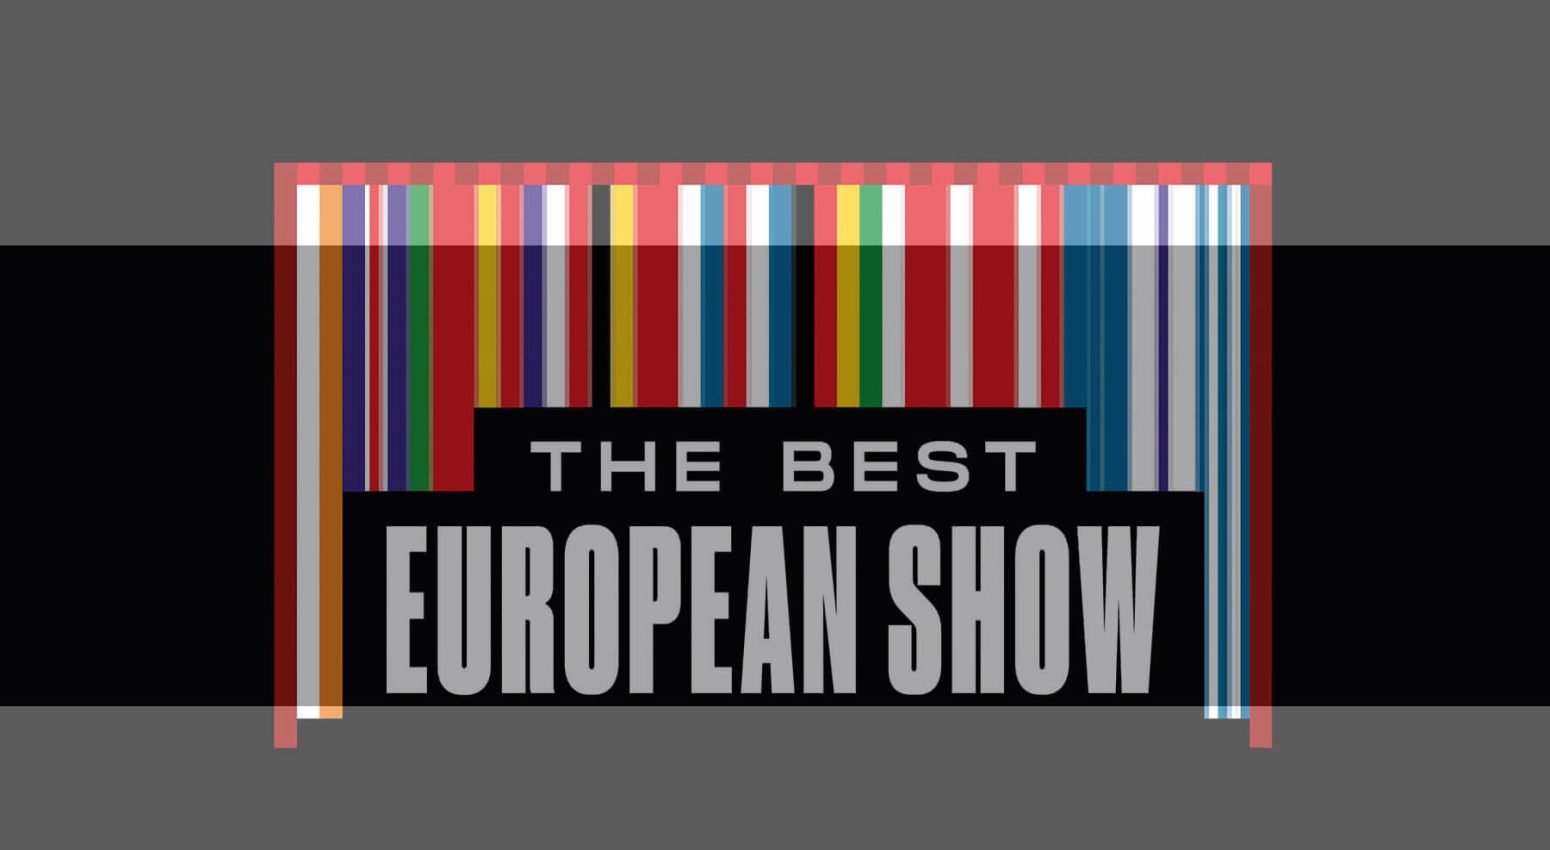 The Best European Show